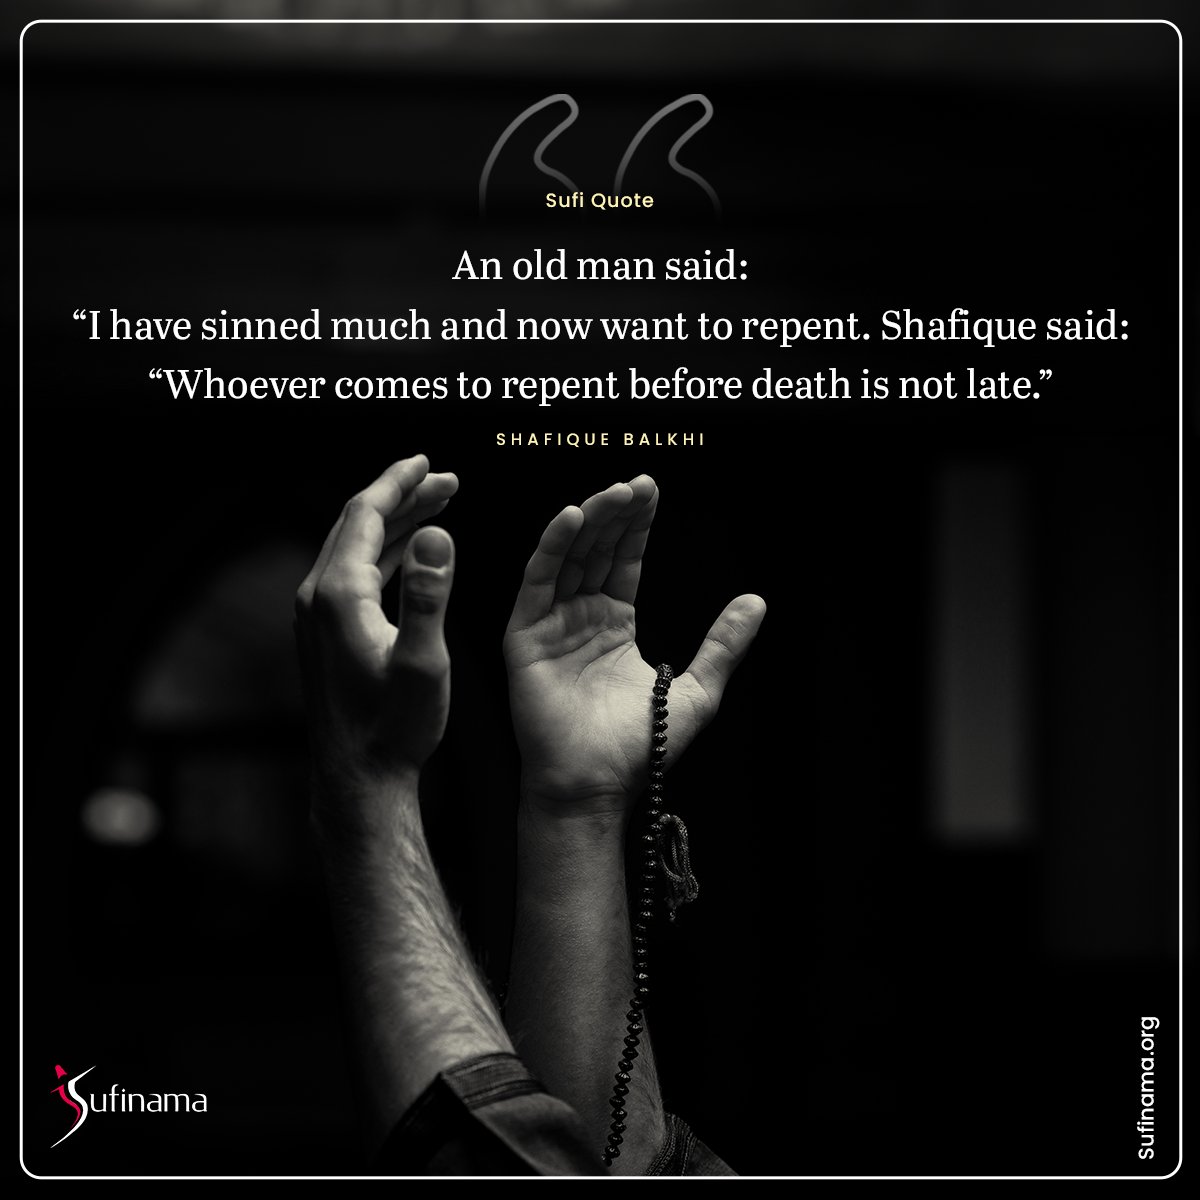 Sufi Quotes/ Shafique Balkhi #sufinama #sufism #sufi #sufiquotes